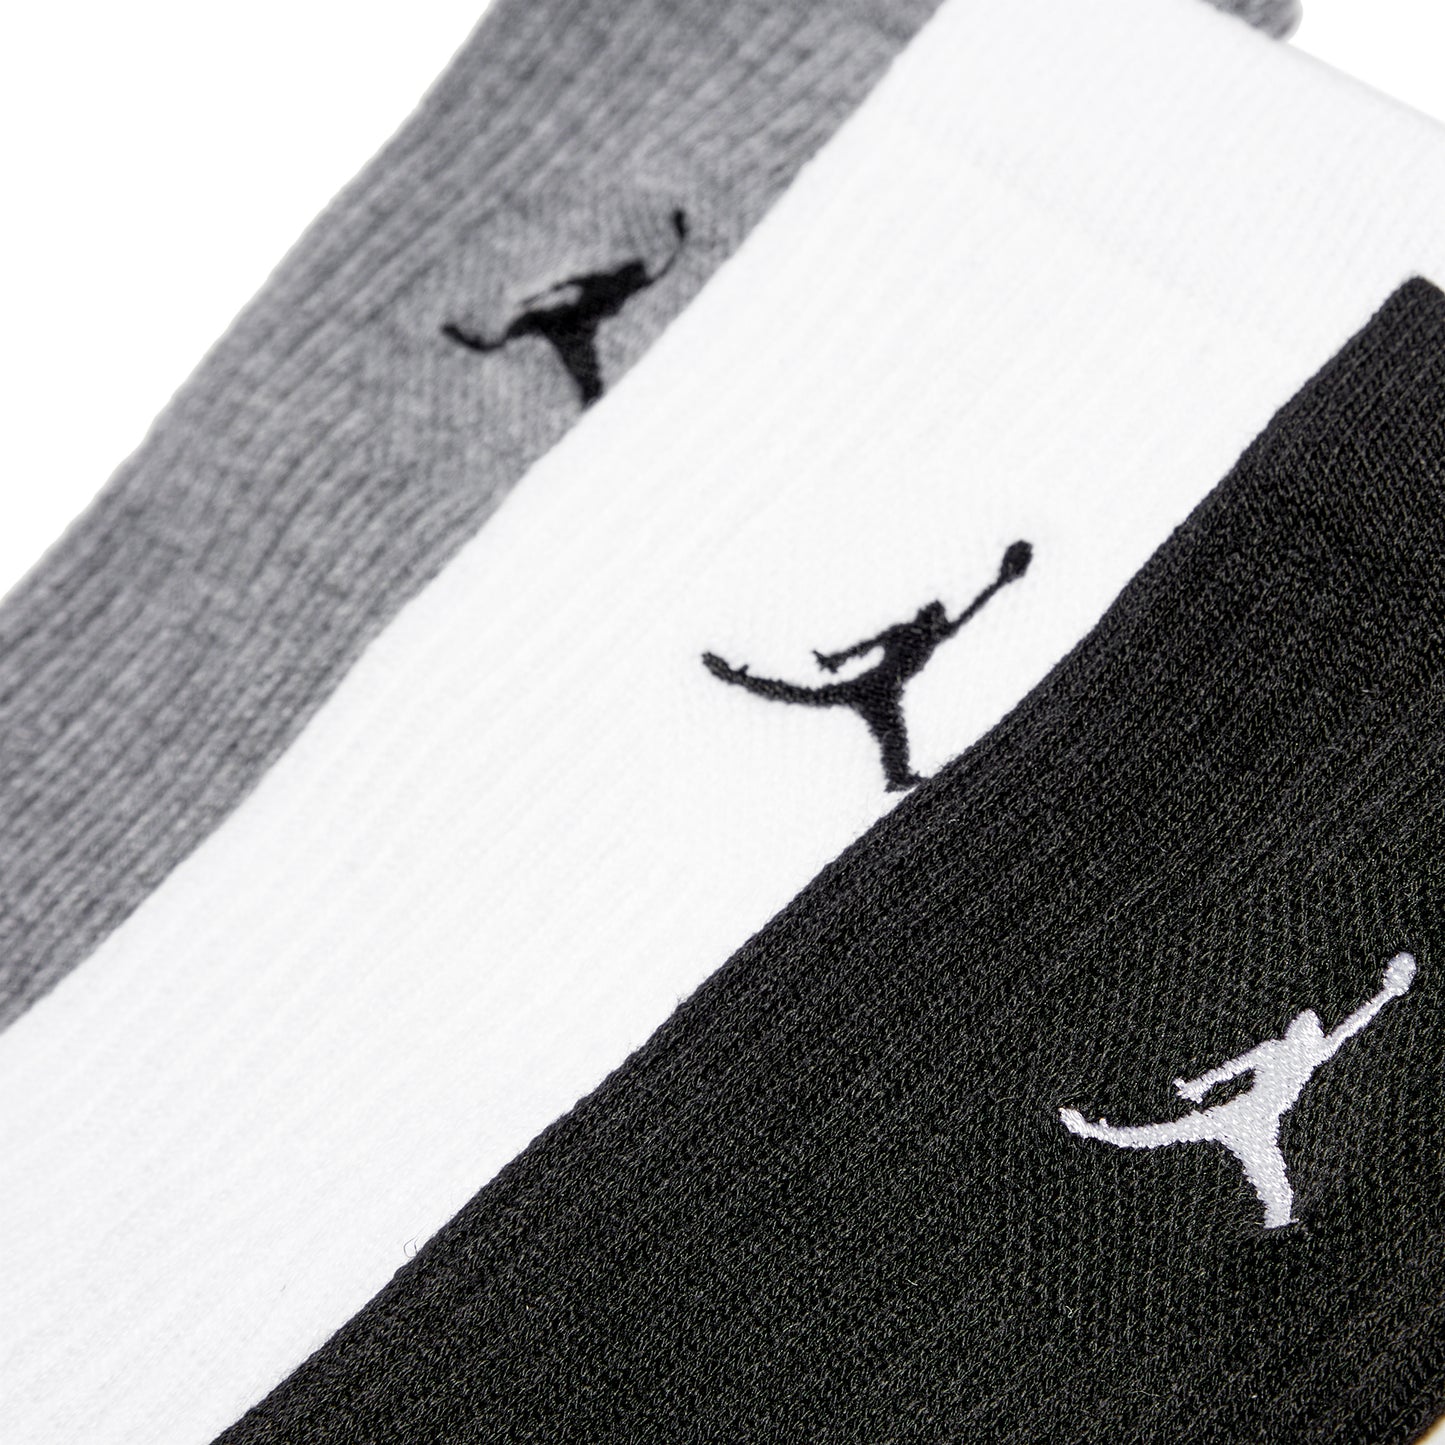 Nike Jordan Socks (Multi Color)